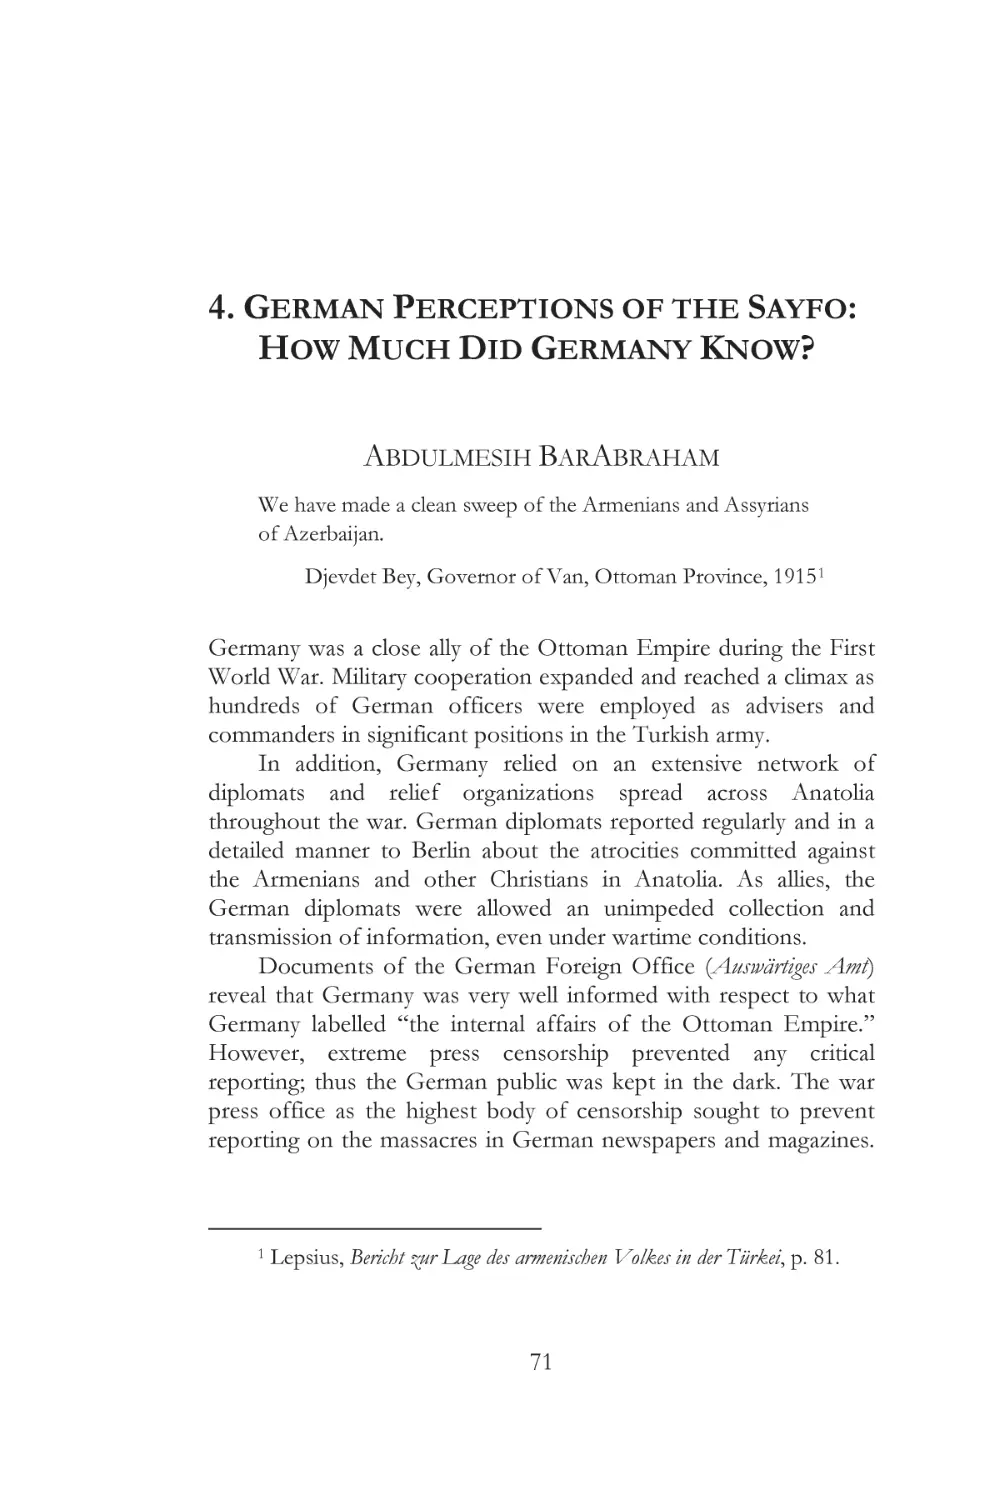 4. GERMAN PERCEPTIONS OF THE SAYFO